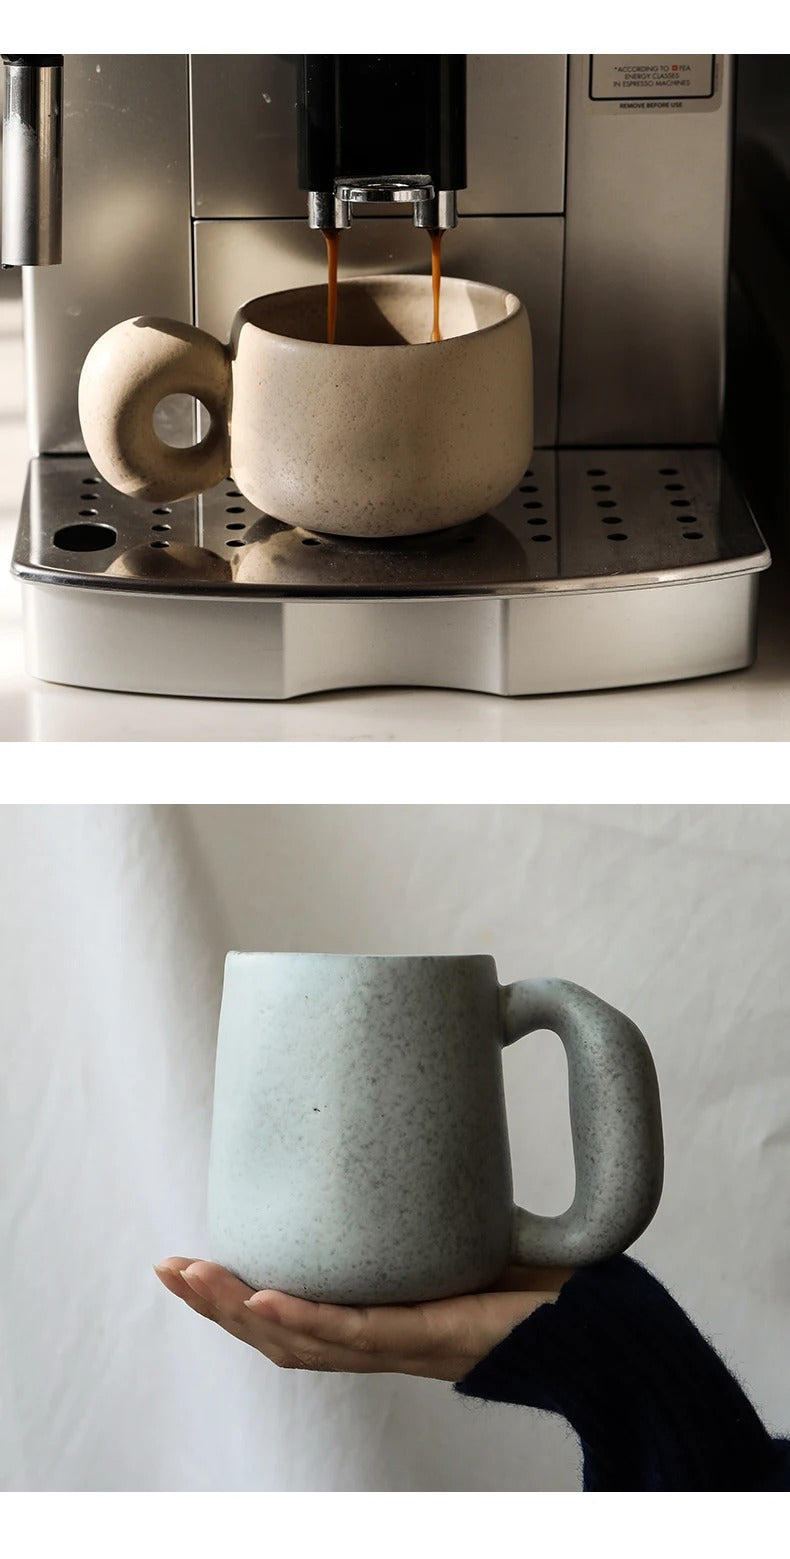 Modern Japanese Stoneware Retro Coffee Mug │ Neutral Aesthetic Decorative Cups Kitchenware Besontique Home Decor